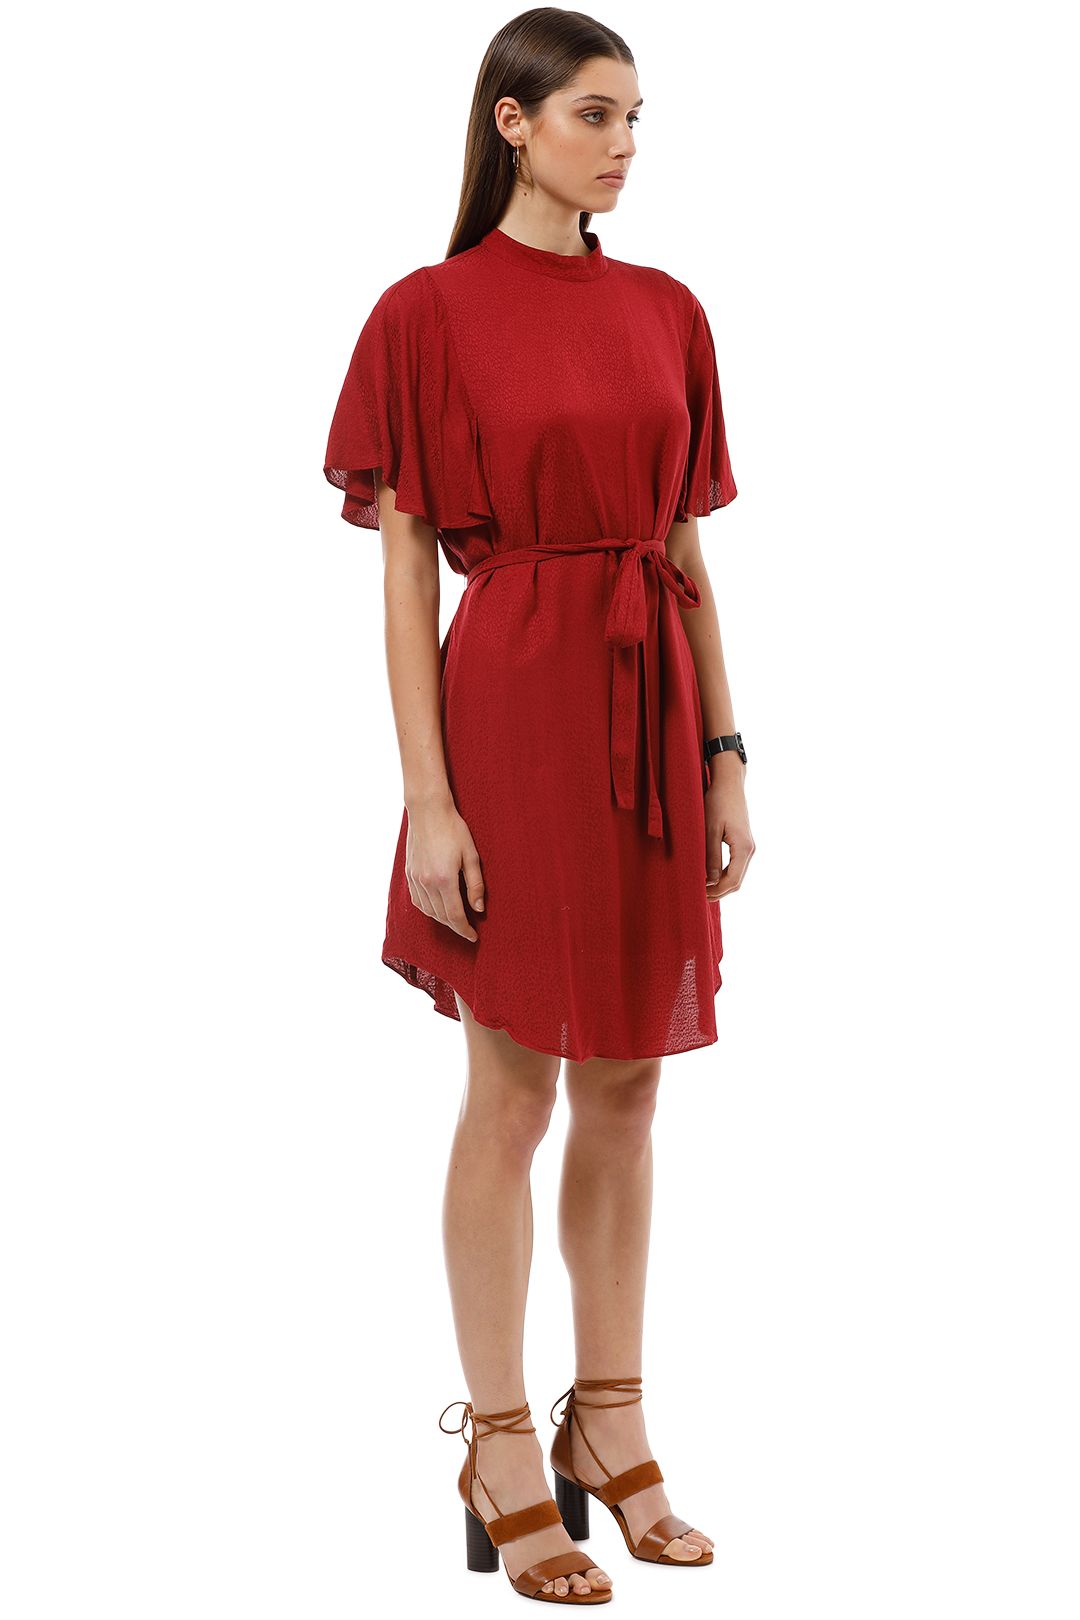 Saba - Meadow Dress - Red - Side